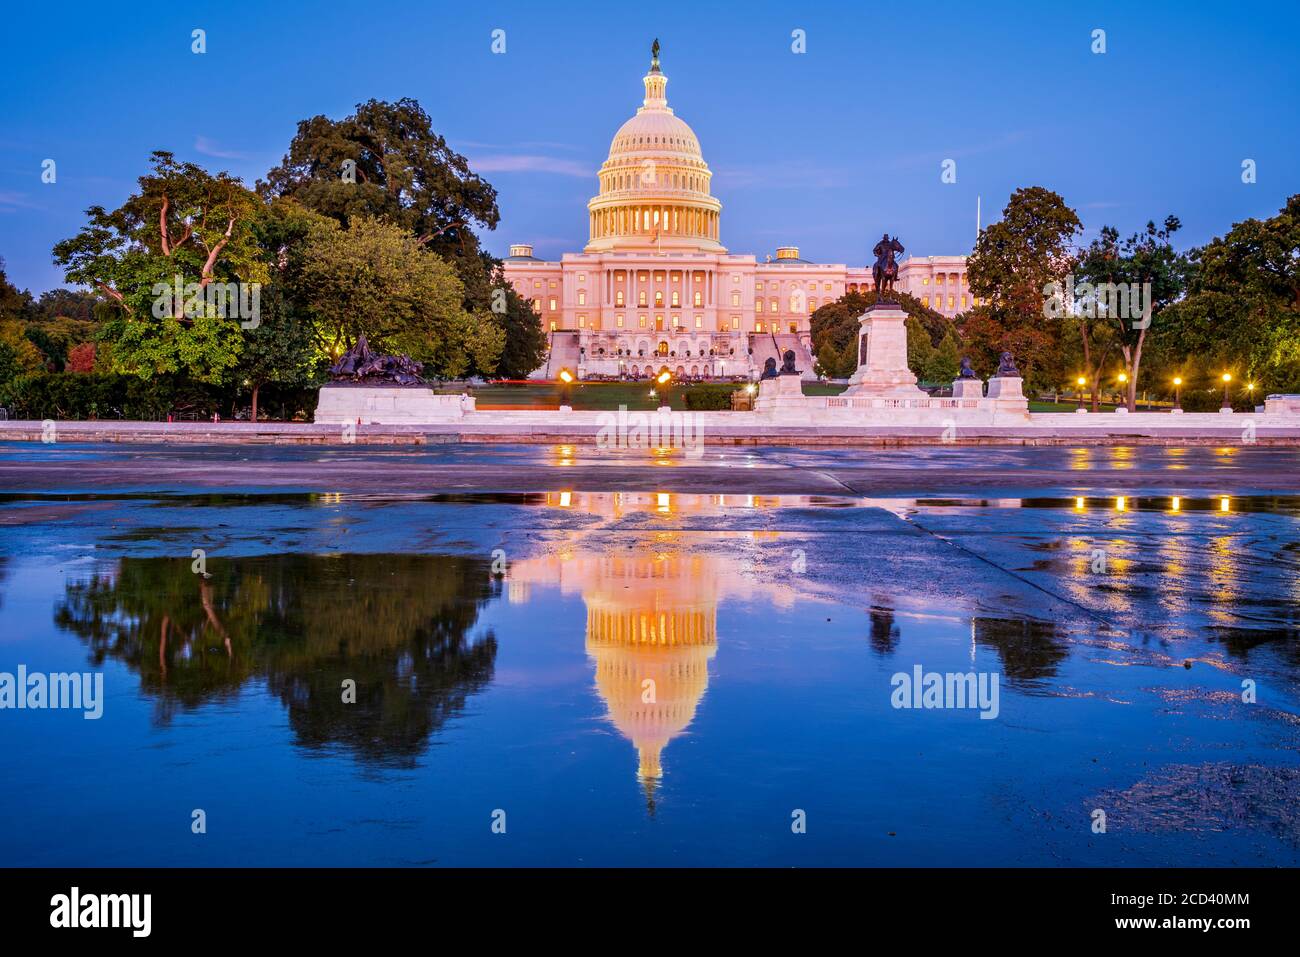 Washington DC, USA - The United States Capitol building at twilight. Stock Photo